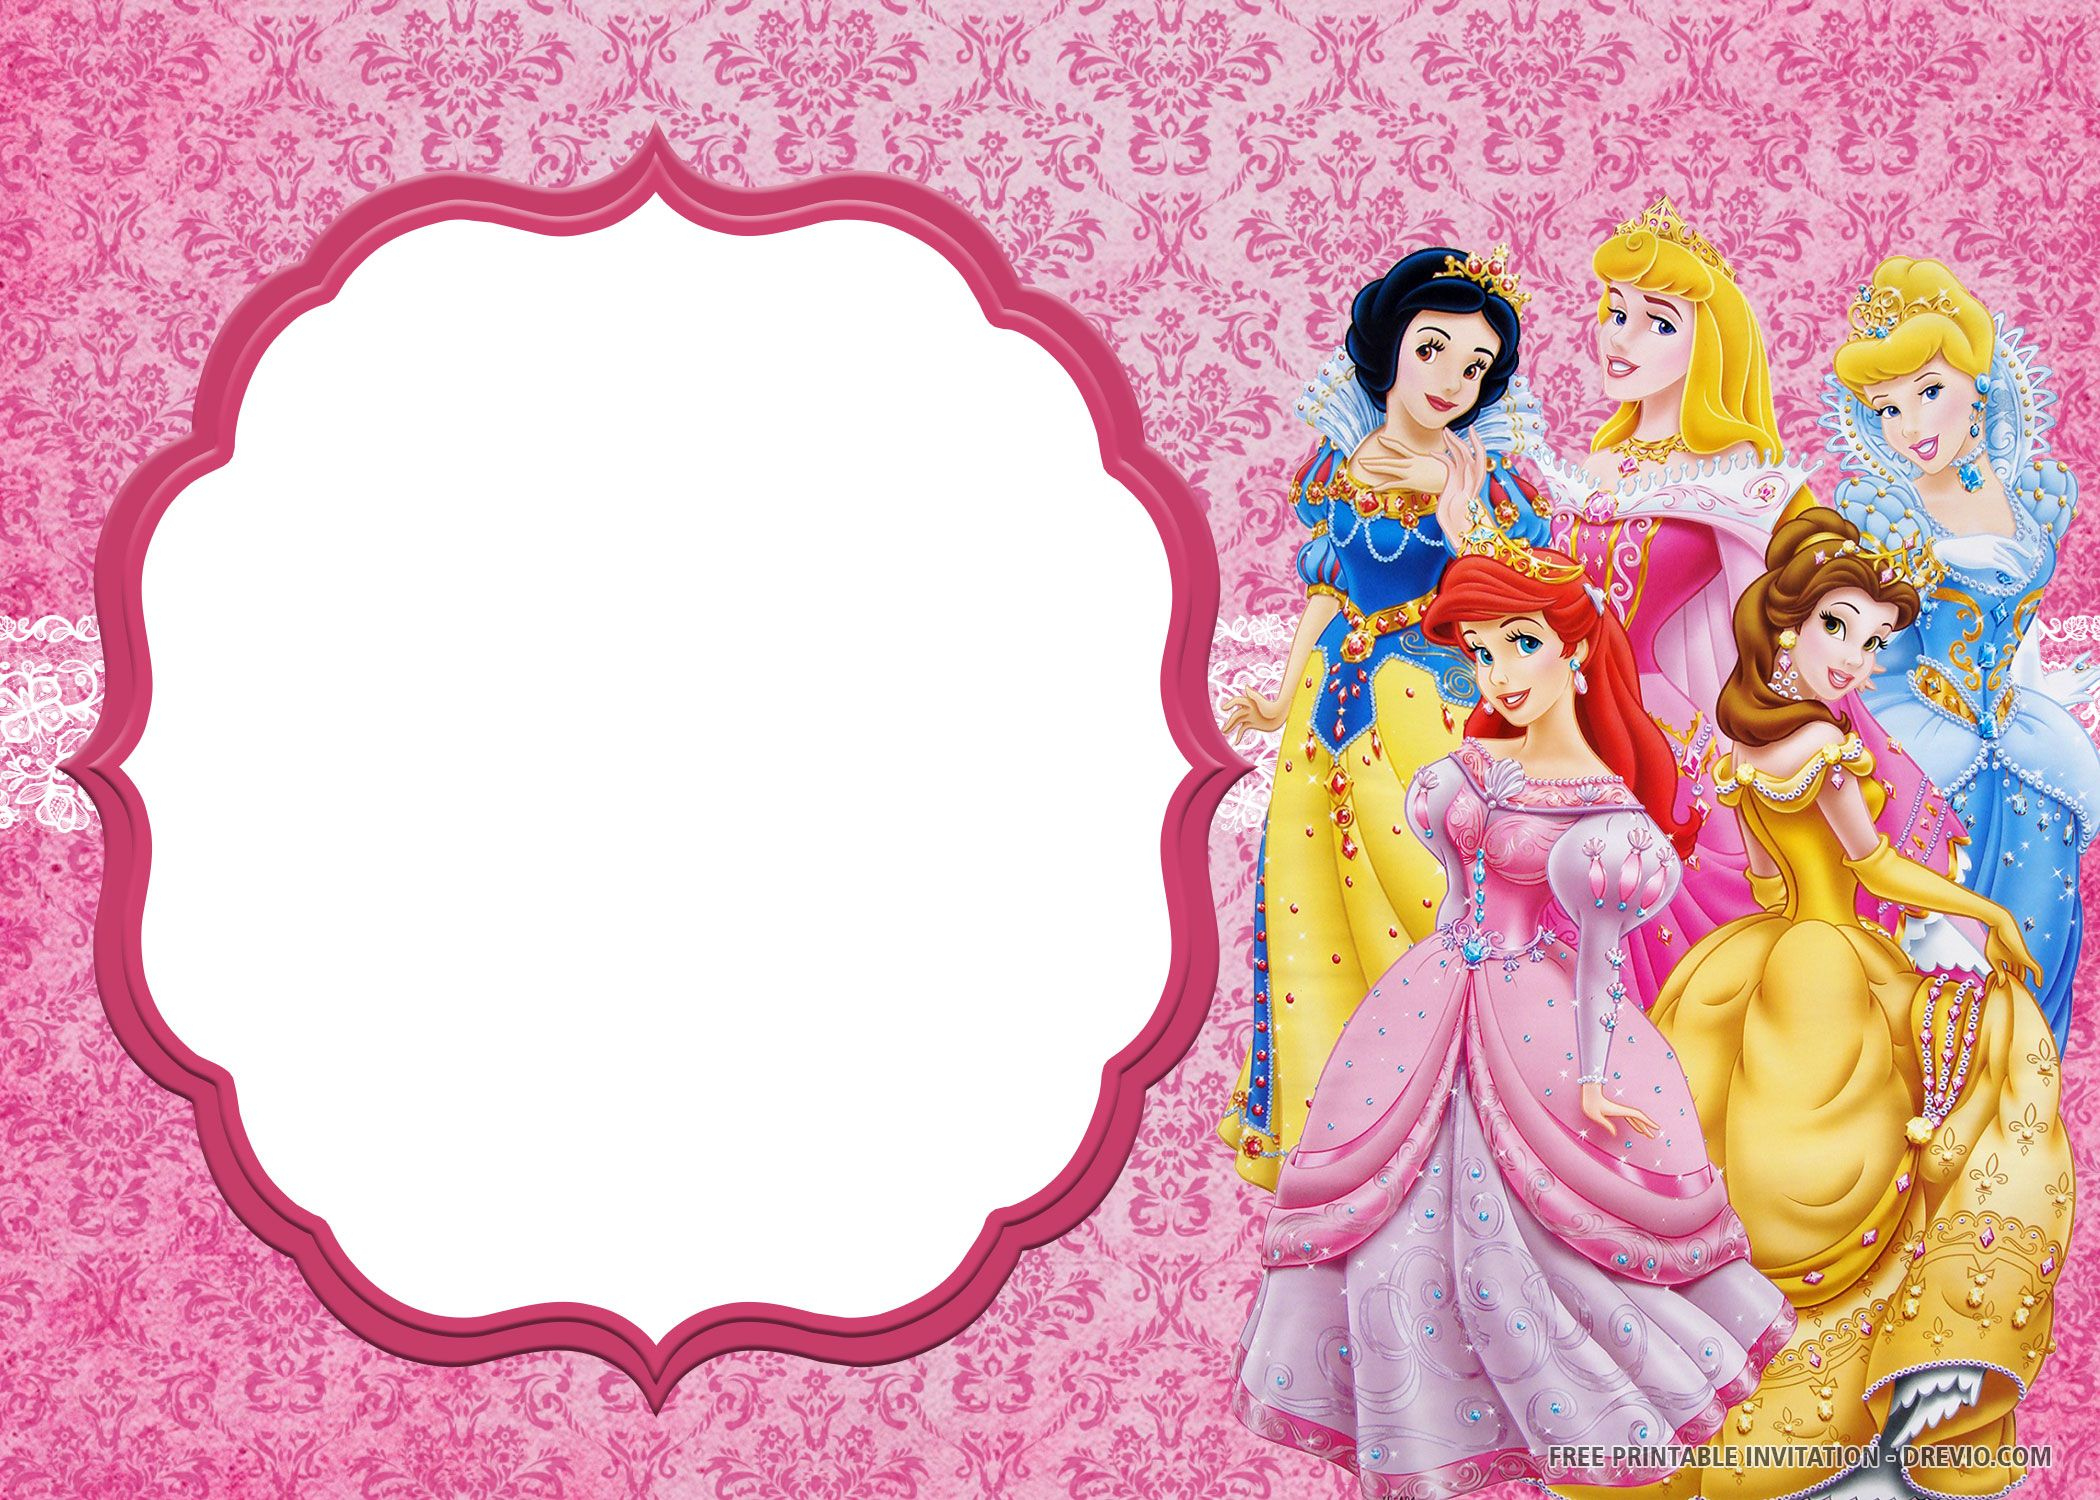 Free Printable Disney Princess Invitation Templates | Disney for Disney Princess Birthday Invitations Free Printable